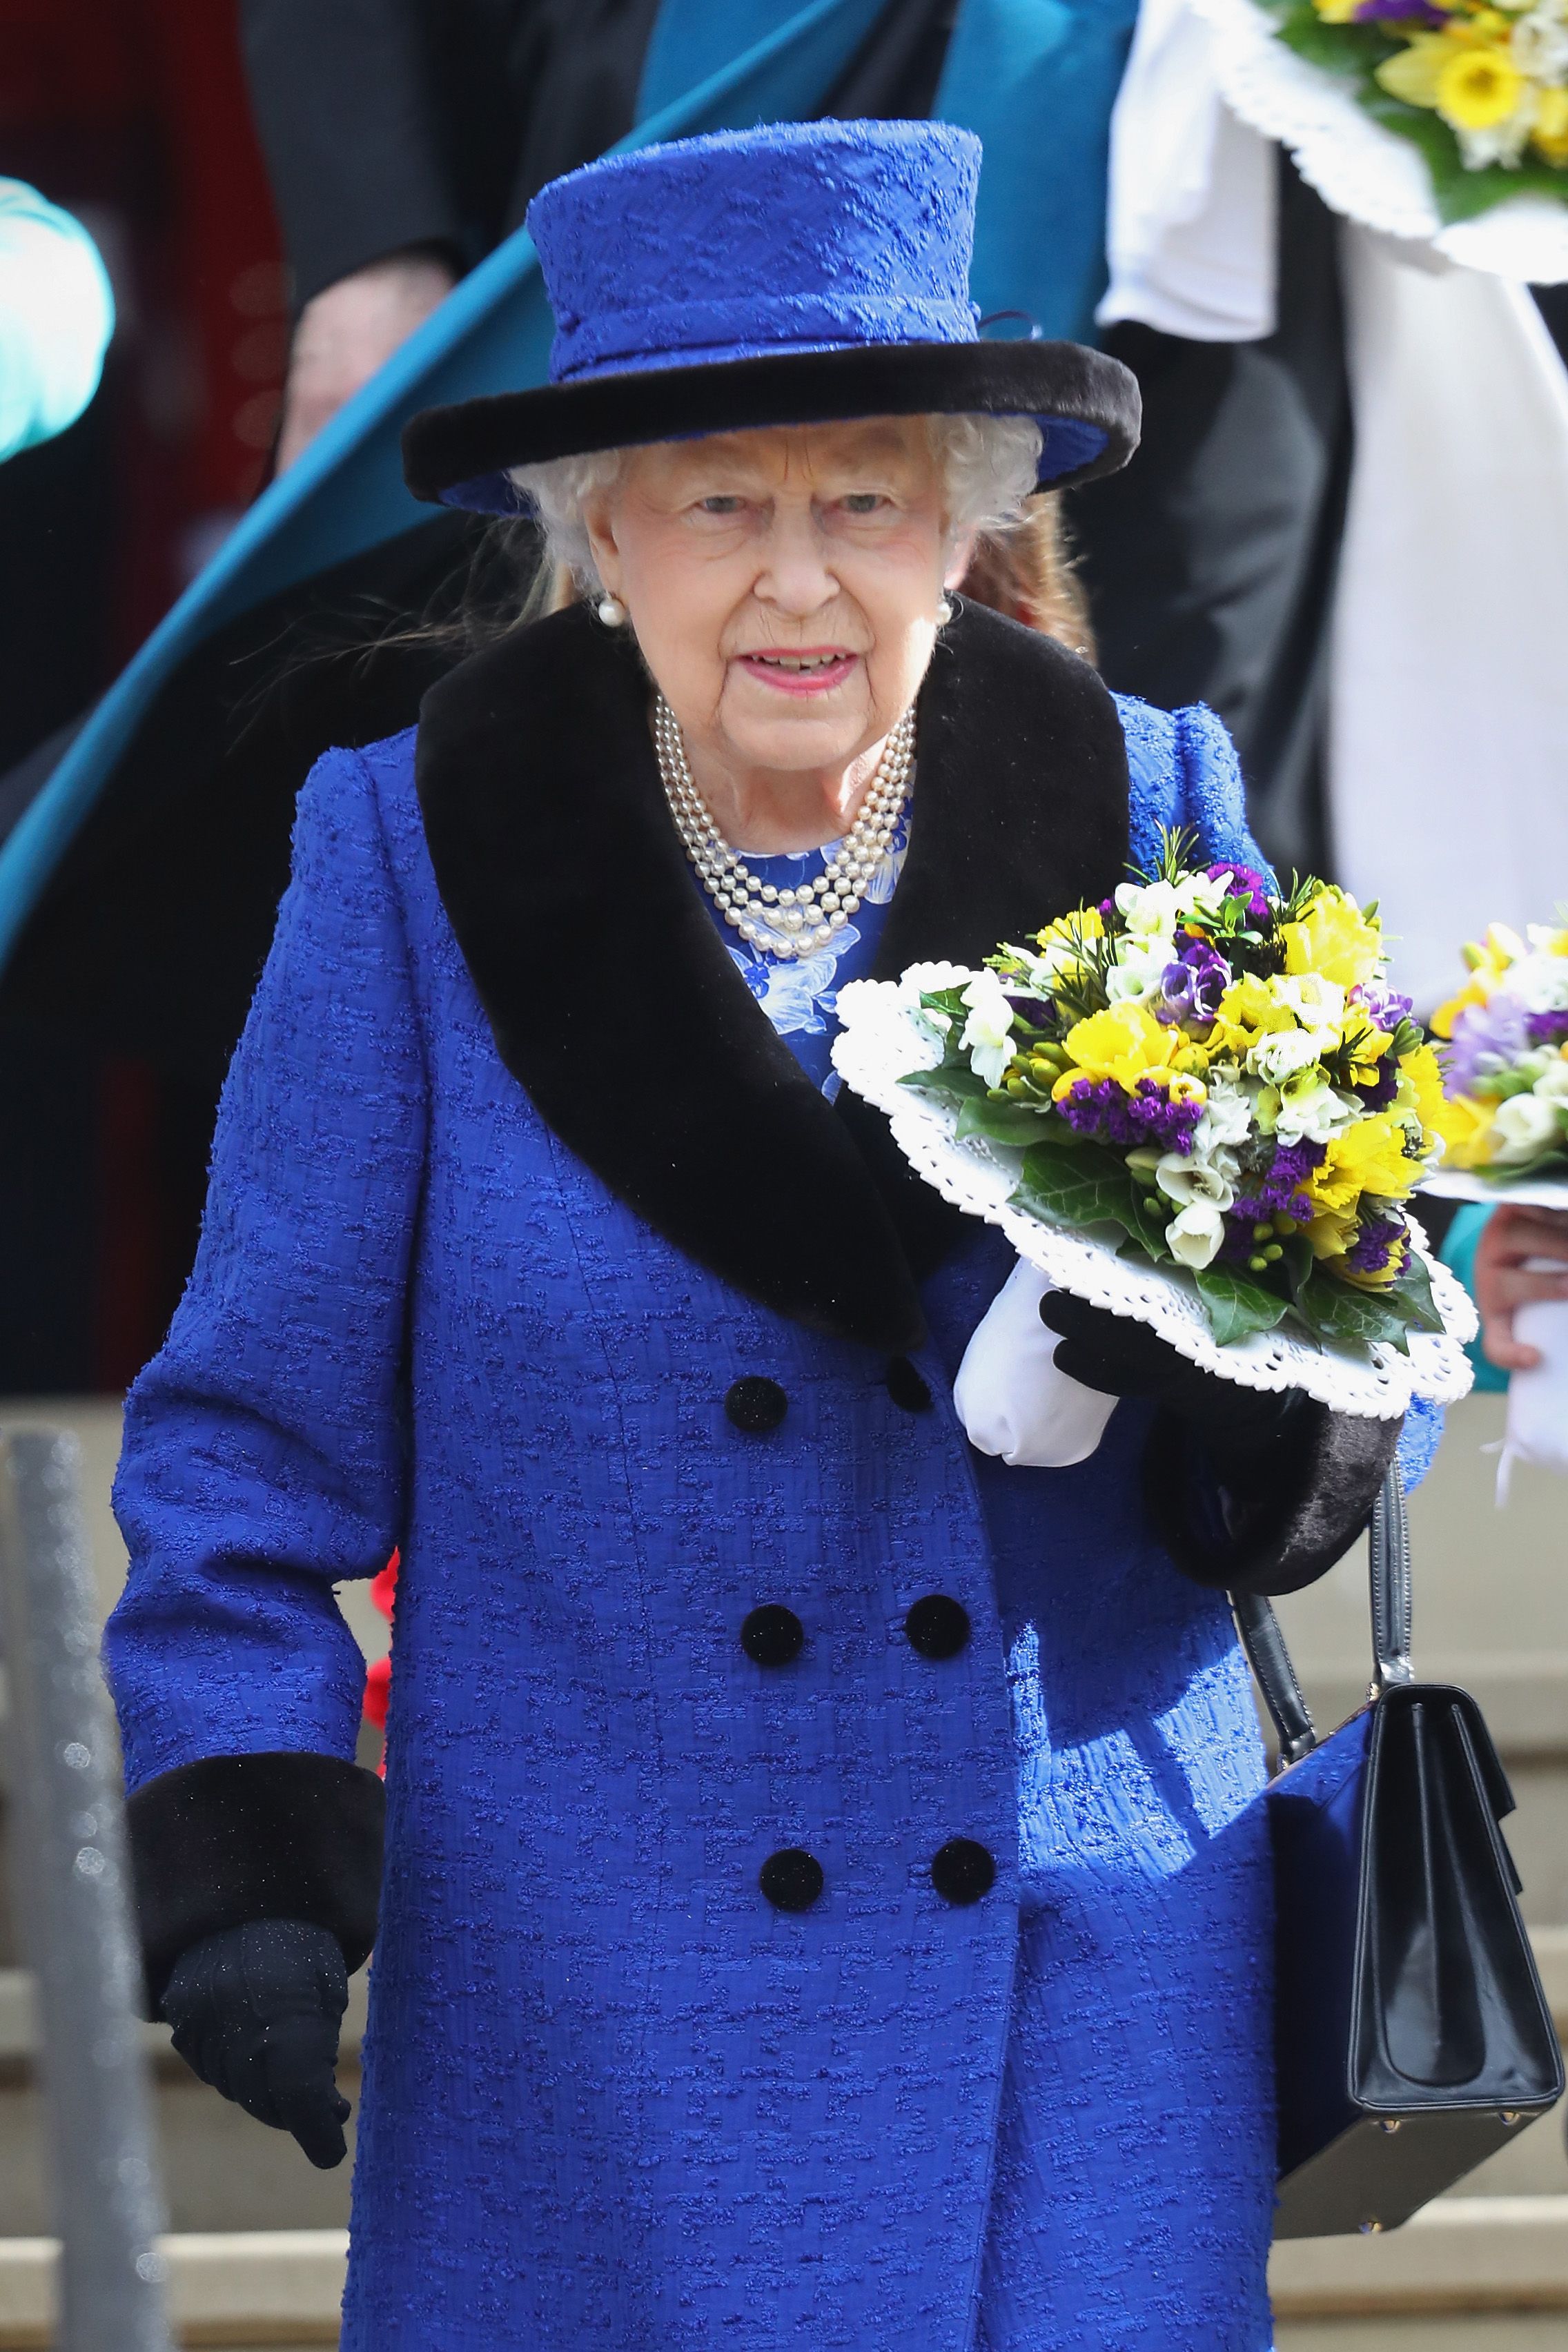 La reina Elizabeth II saliendo de la Capilla de St George, el 29 de marzo de 2018 en Windsor, Inglaterra. | Foto: Getty Images